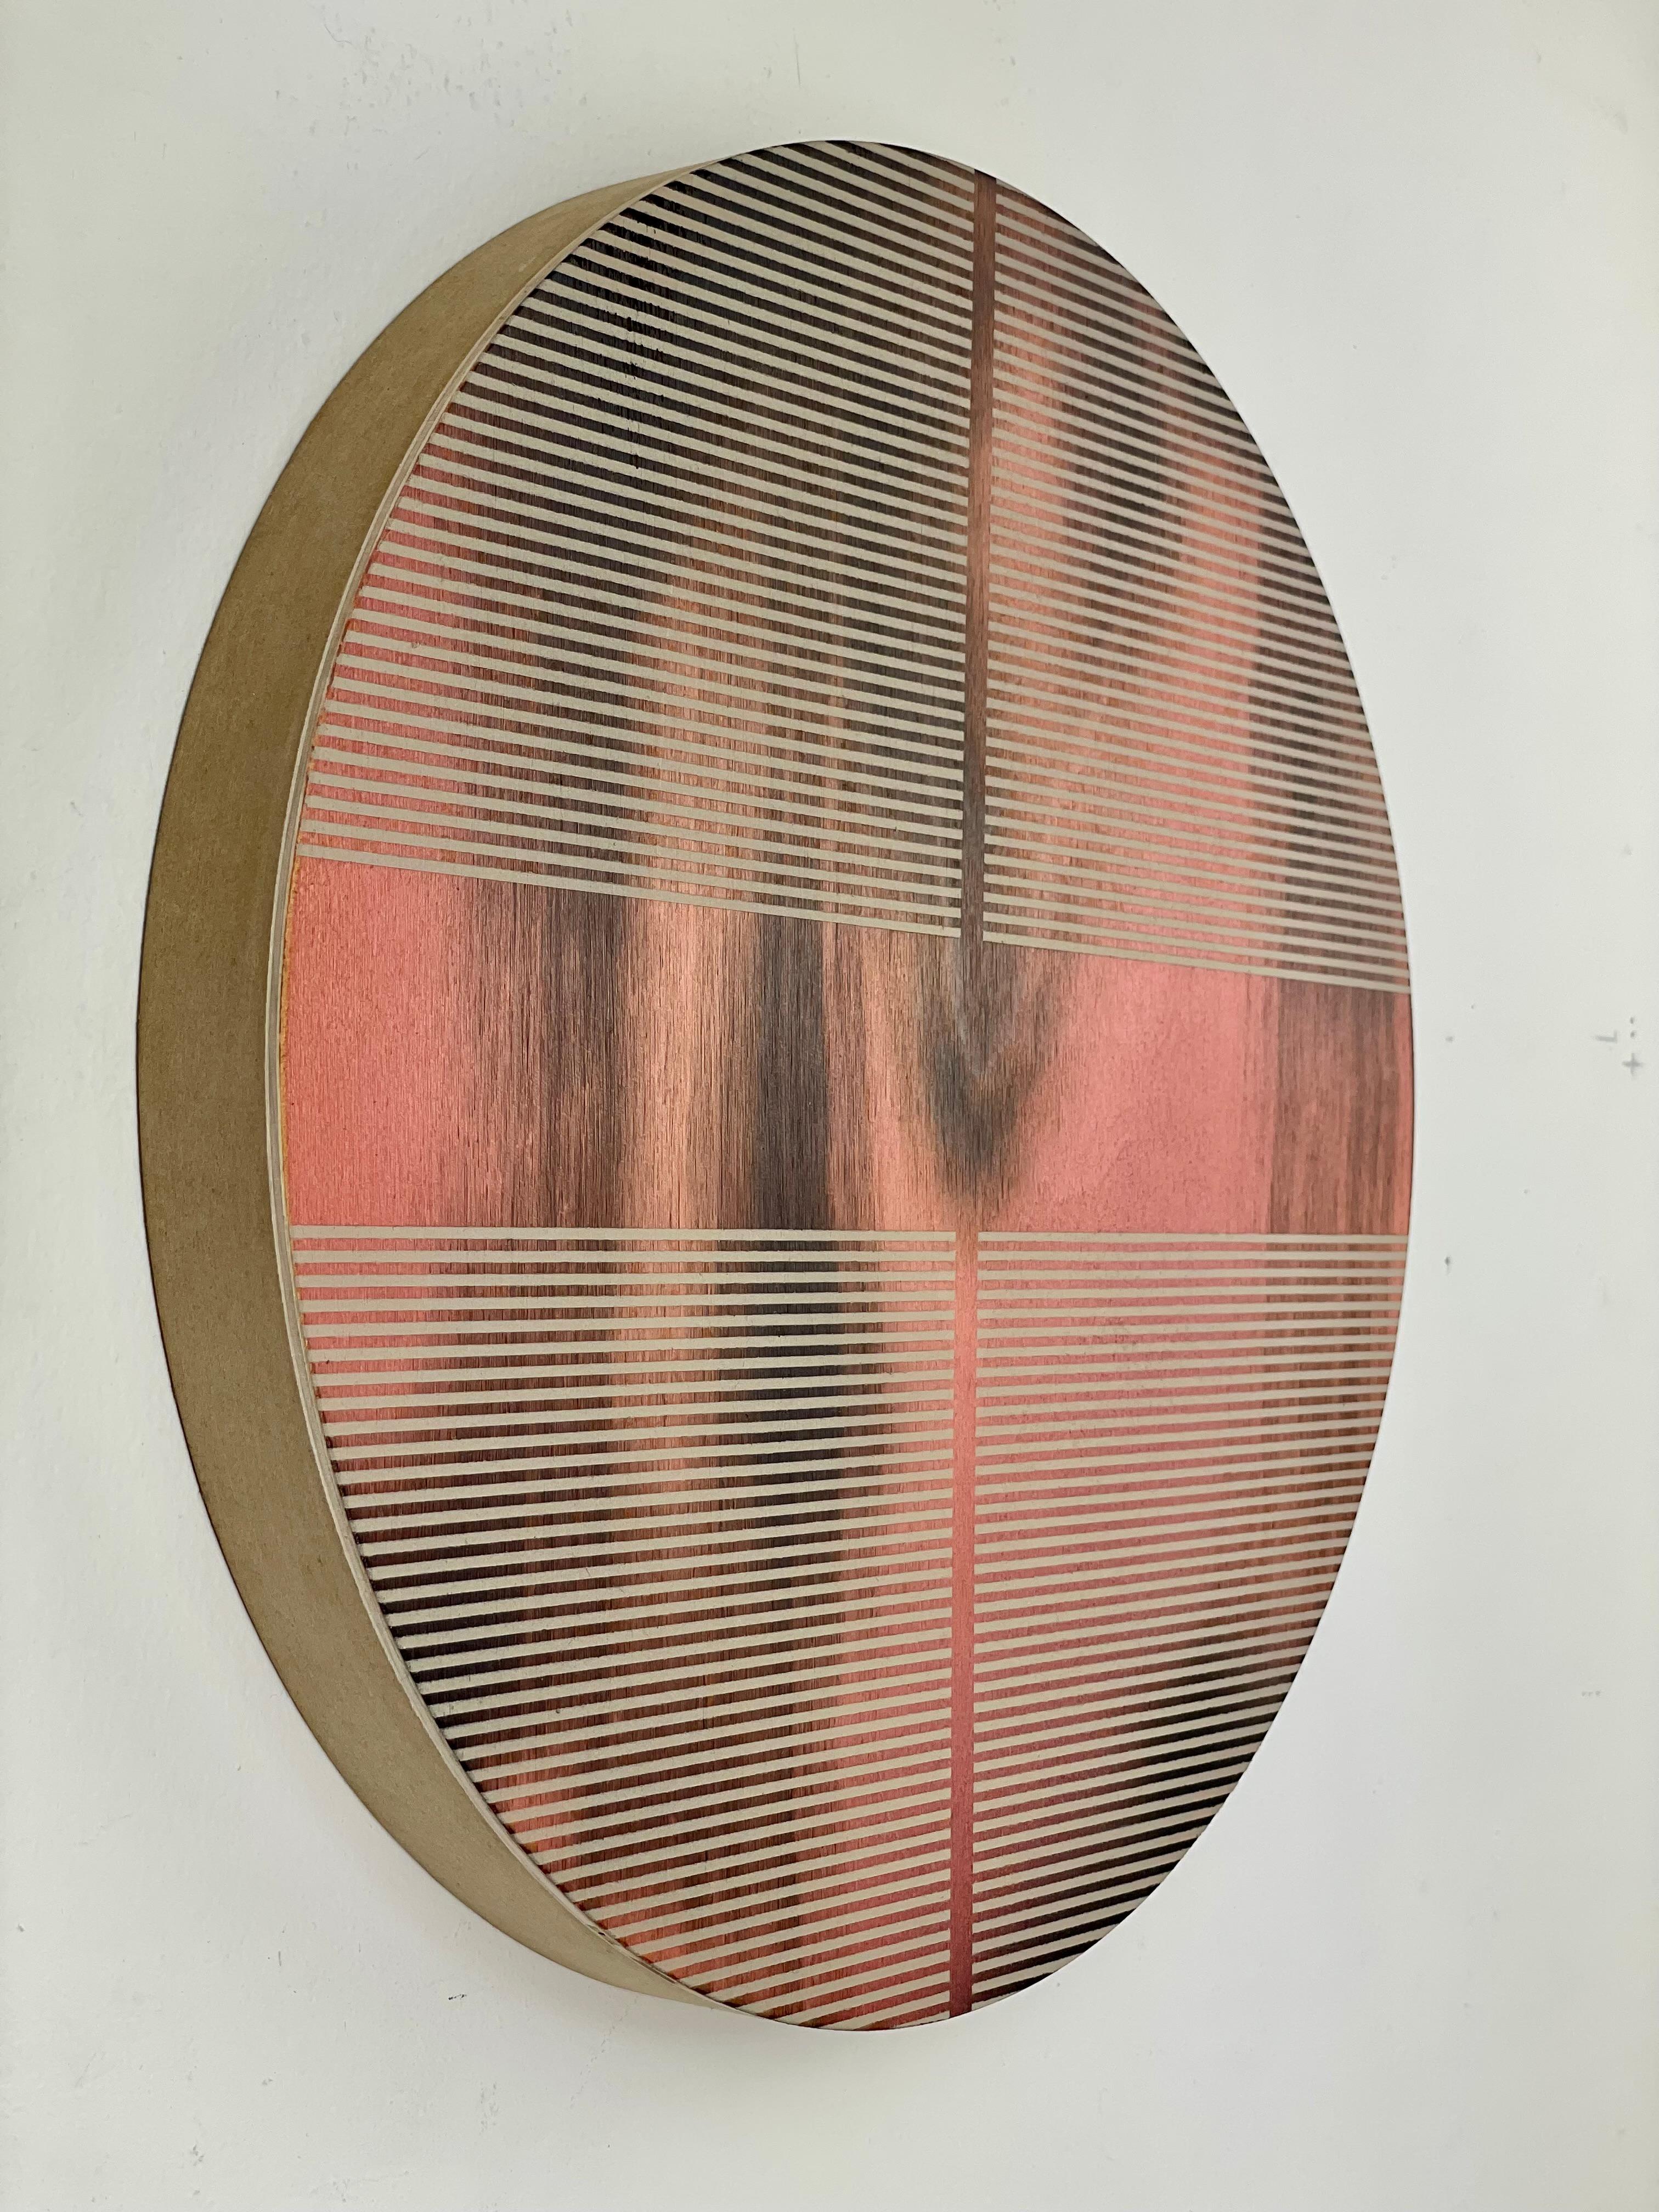 Peach fuzz pink (minimaliste grid round painting on wood dopamine color) - Minimalist Mixed Media Art by Melisa Taylor Metzger